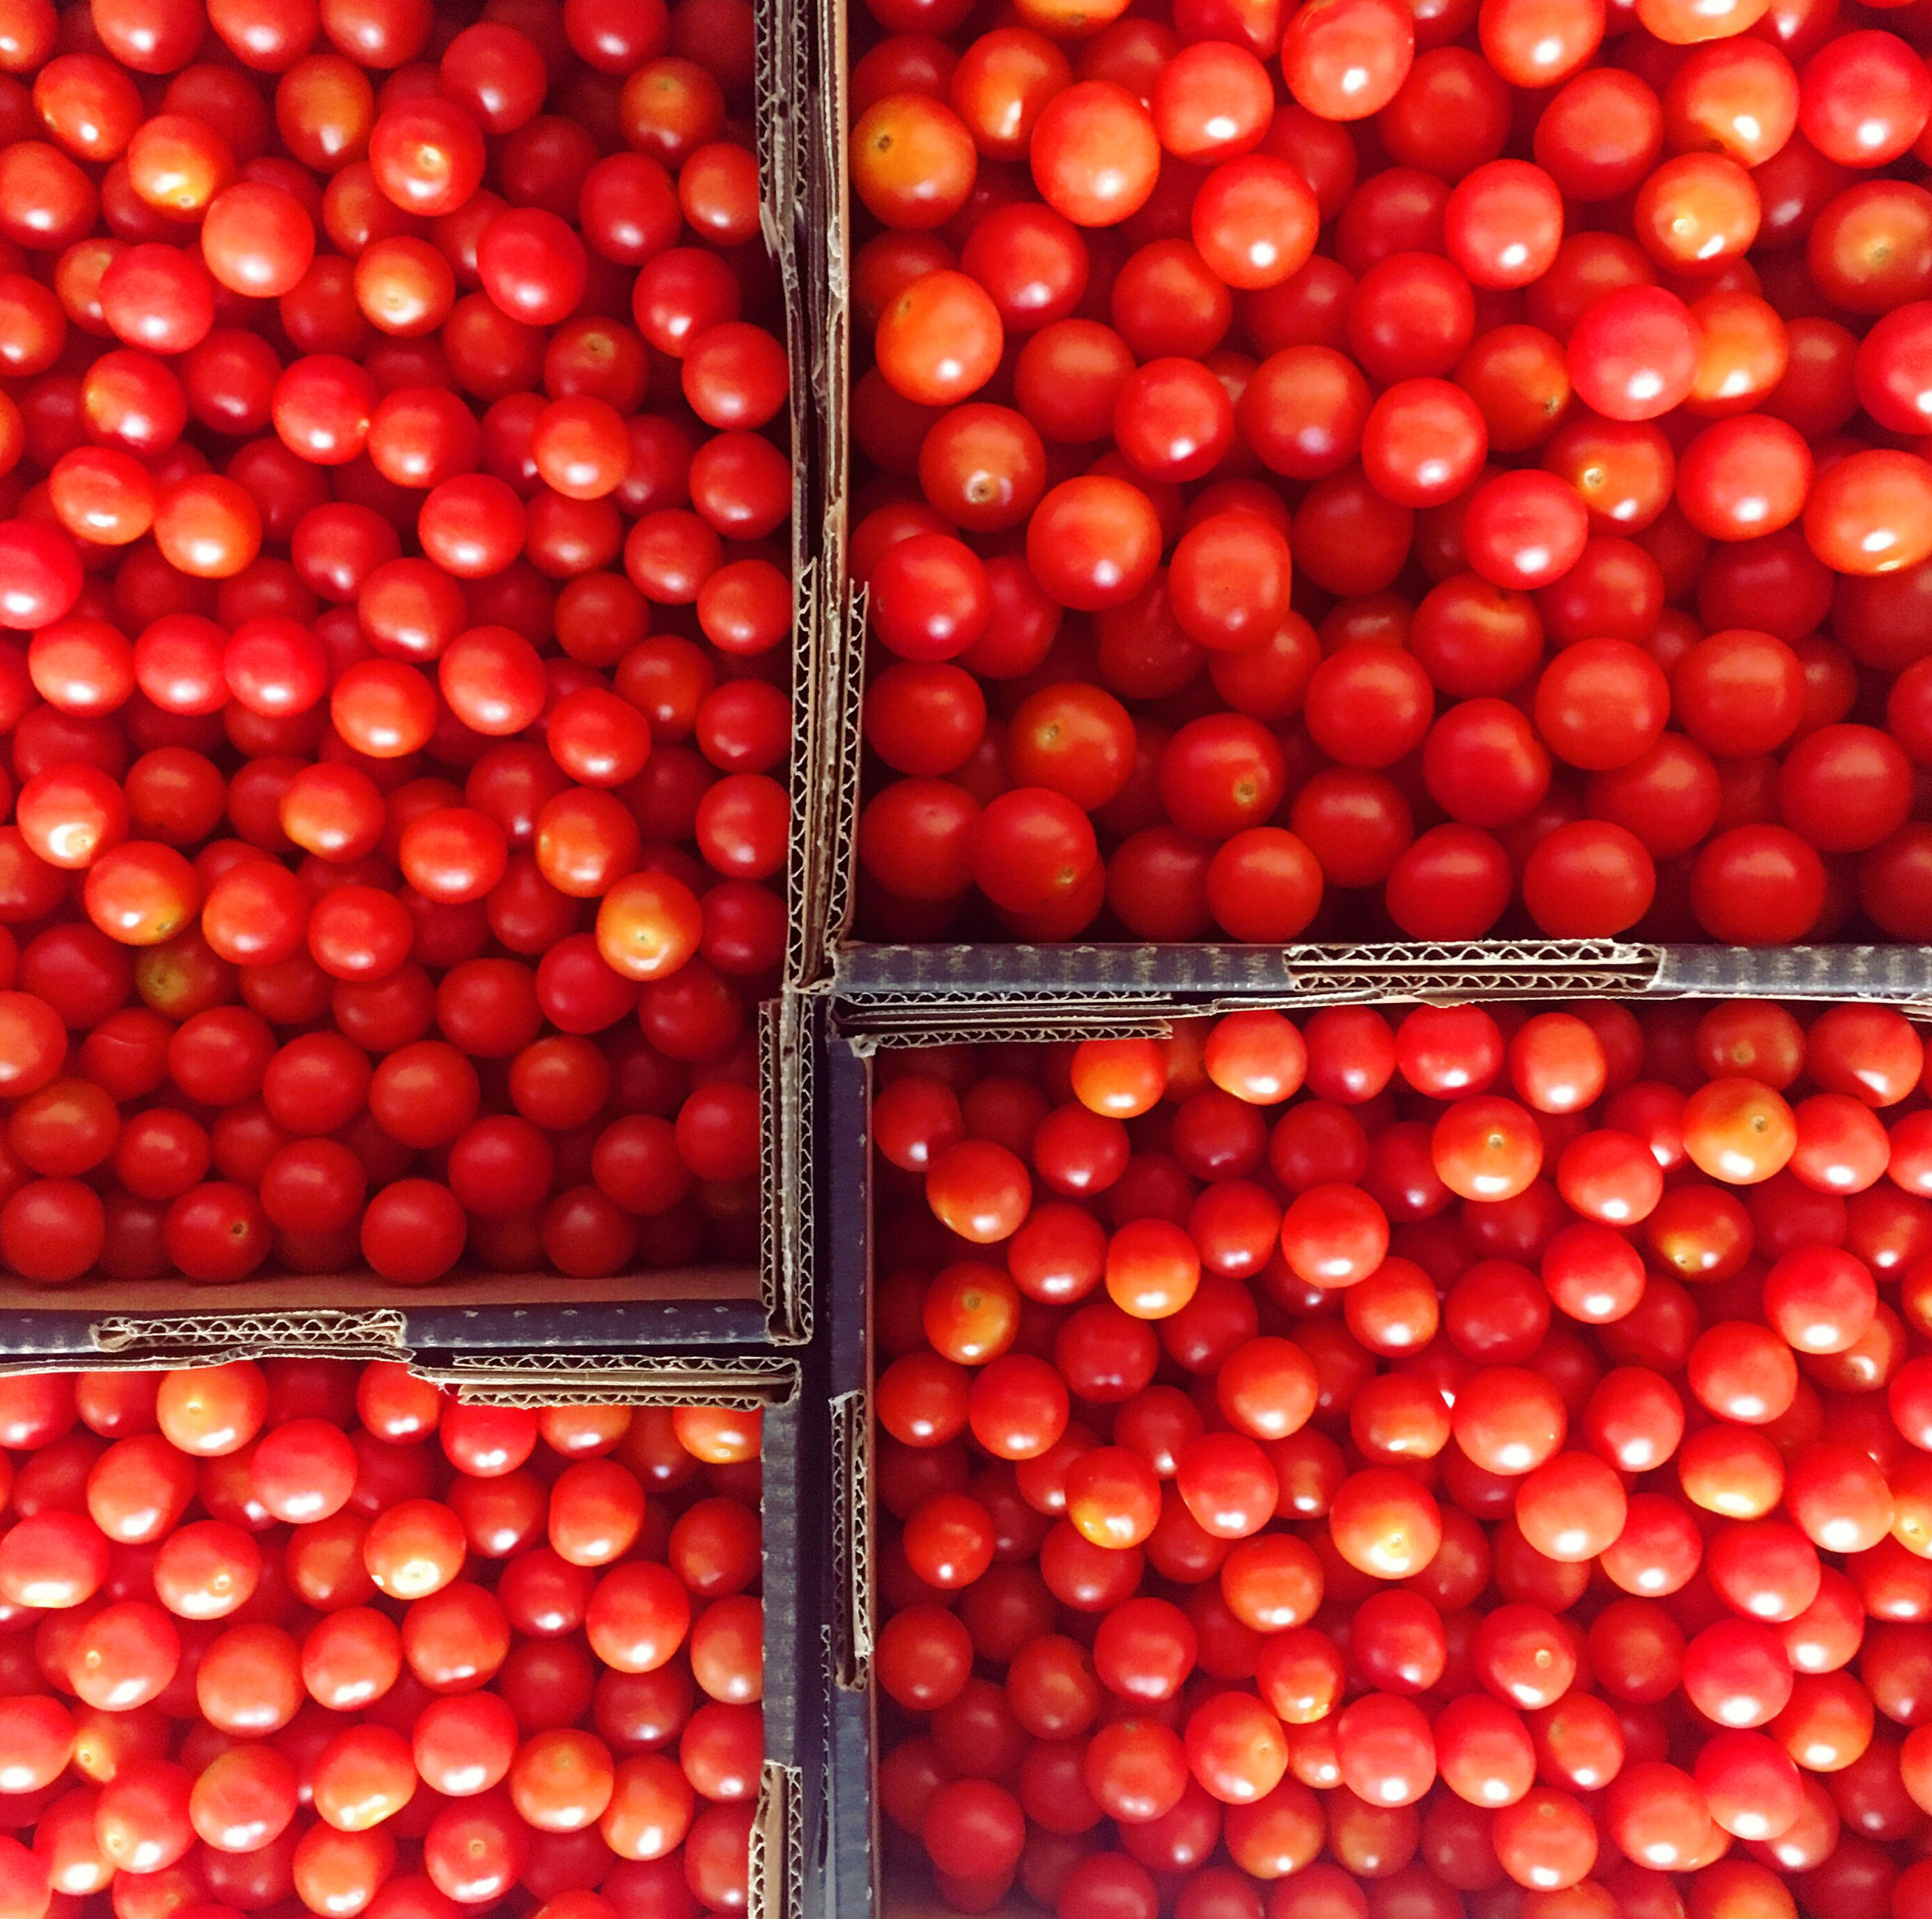 Cherry Tomatoes - The Farm Shop Toowoomba